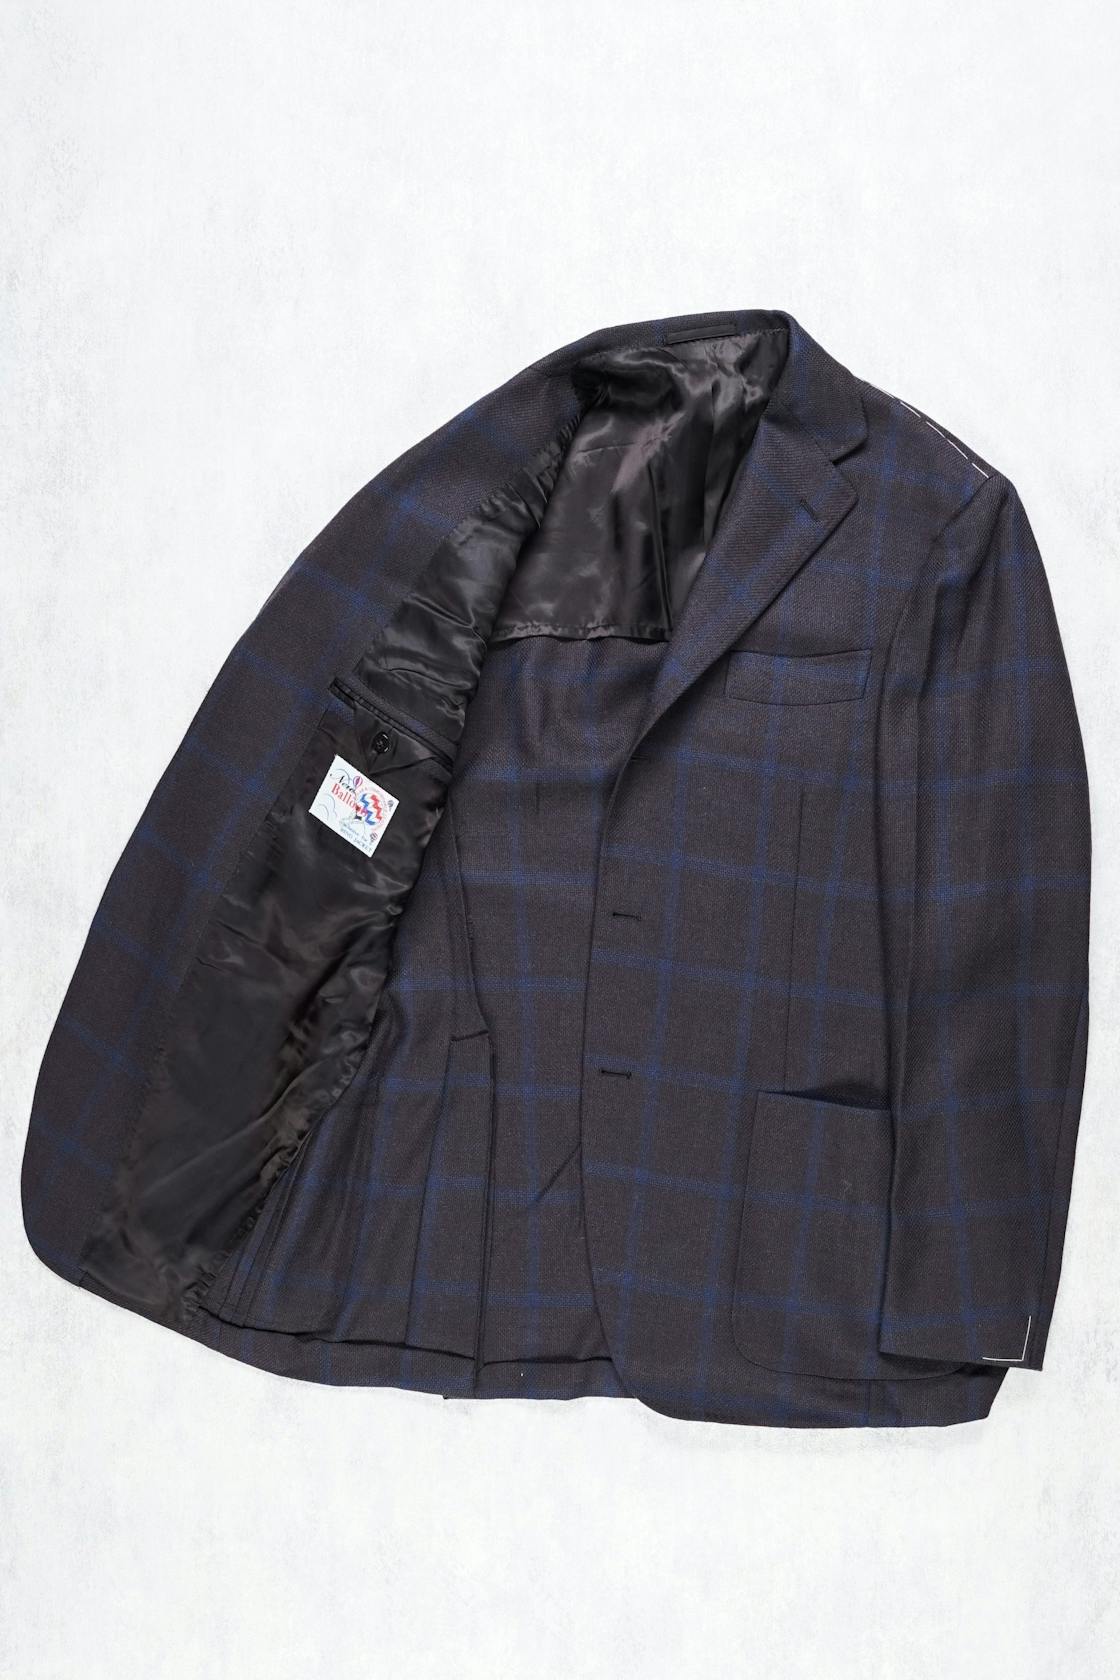 Ring Jacket 184 Brown Blue Check Wool Sport Coat